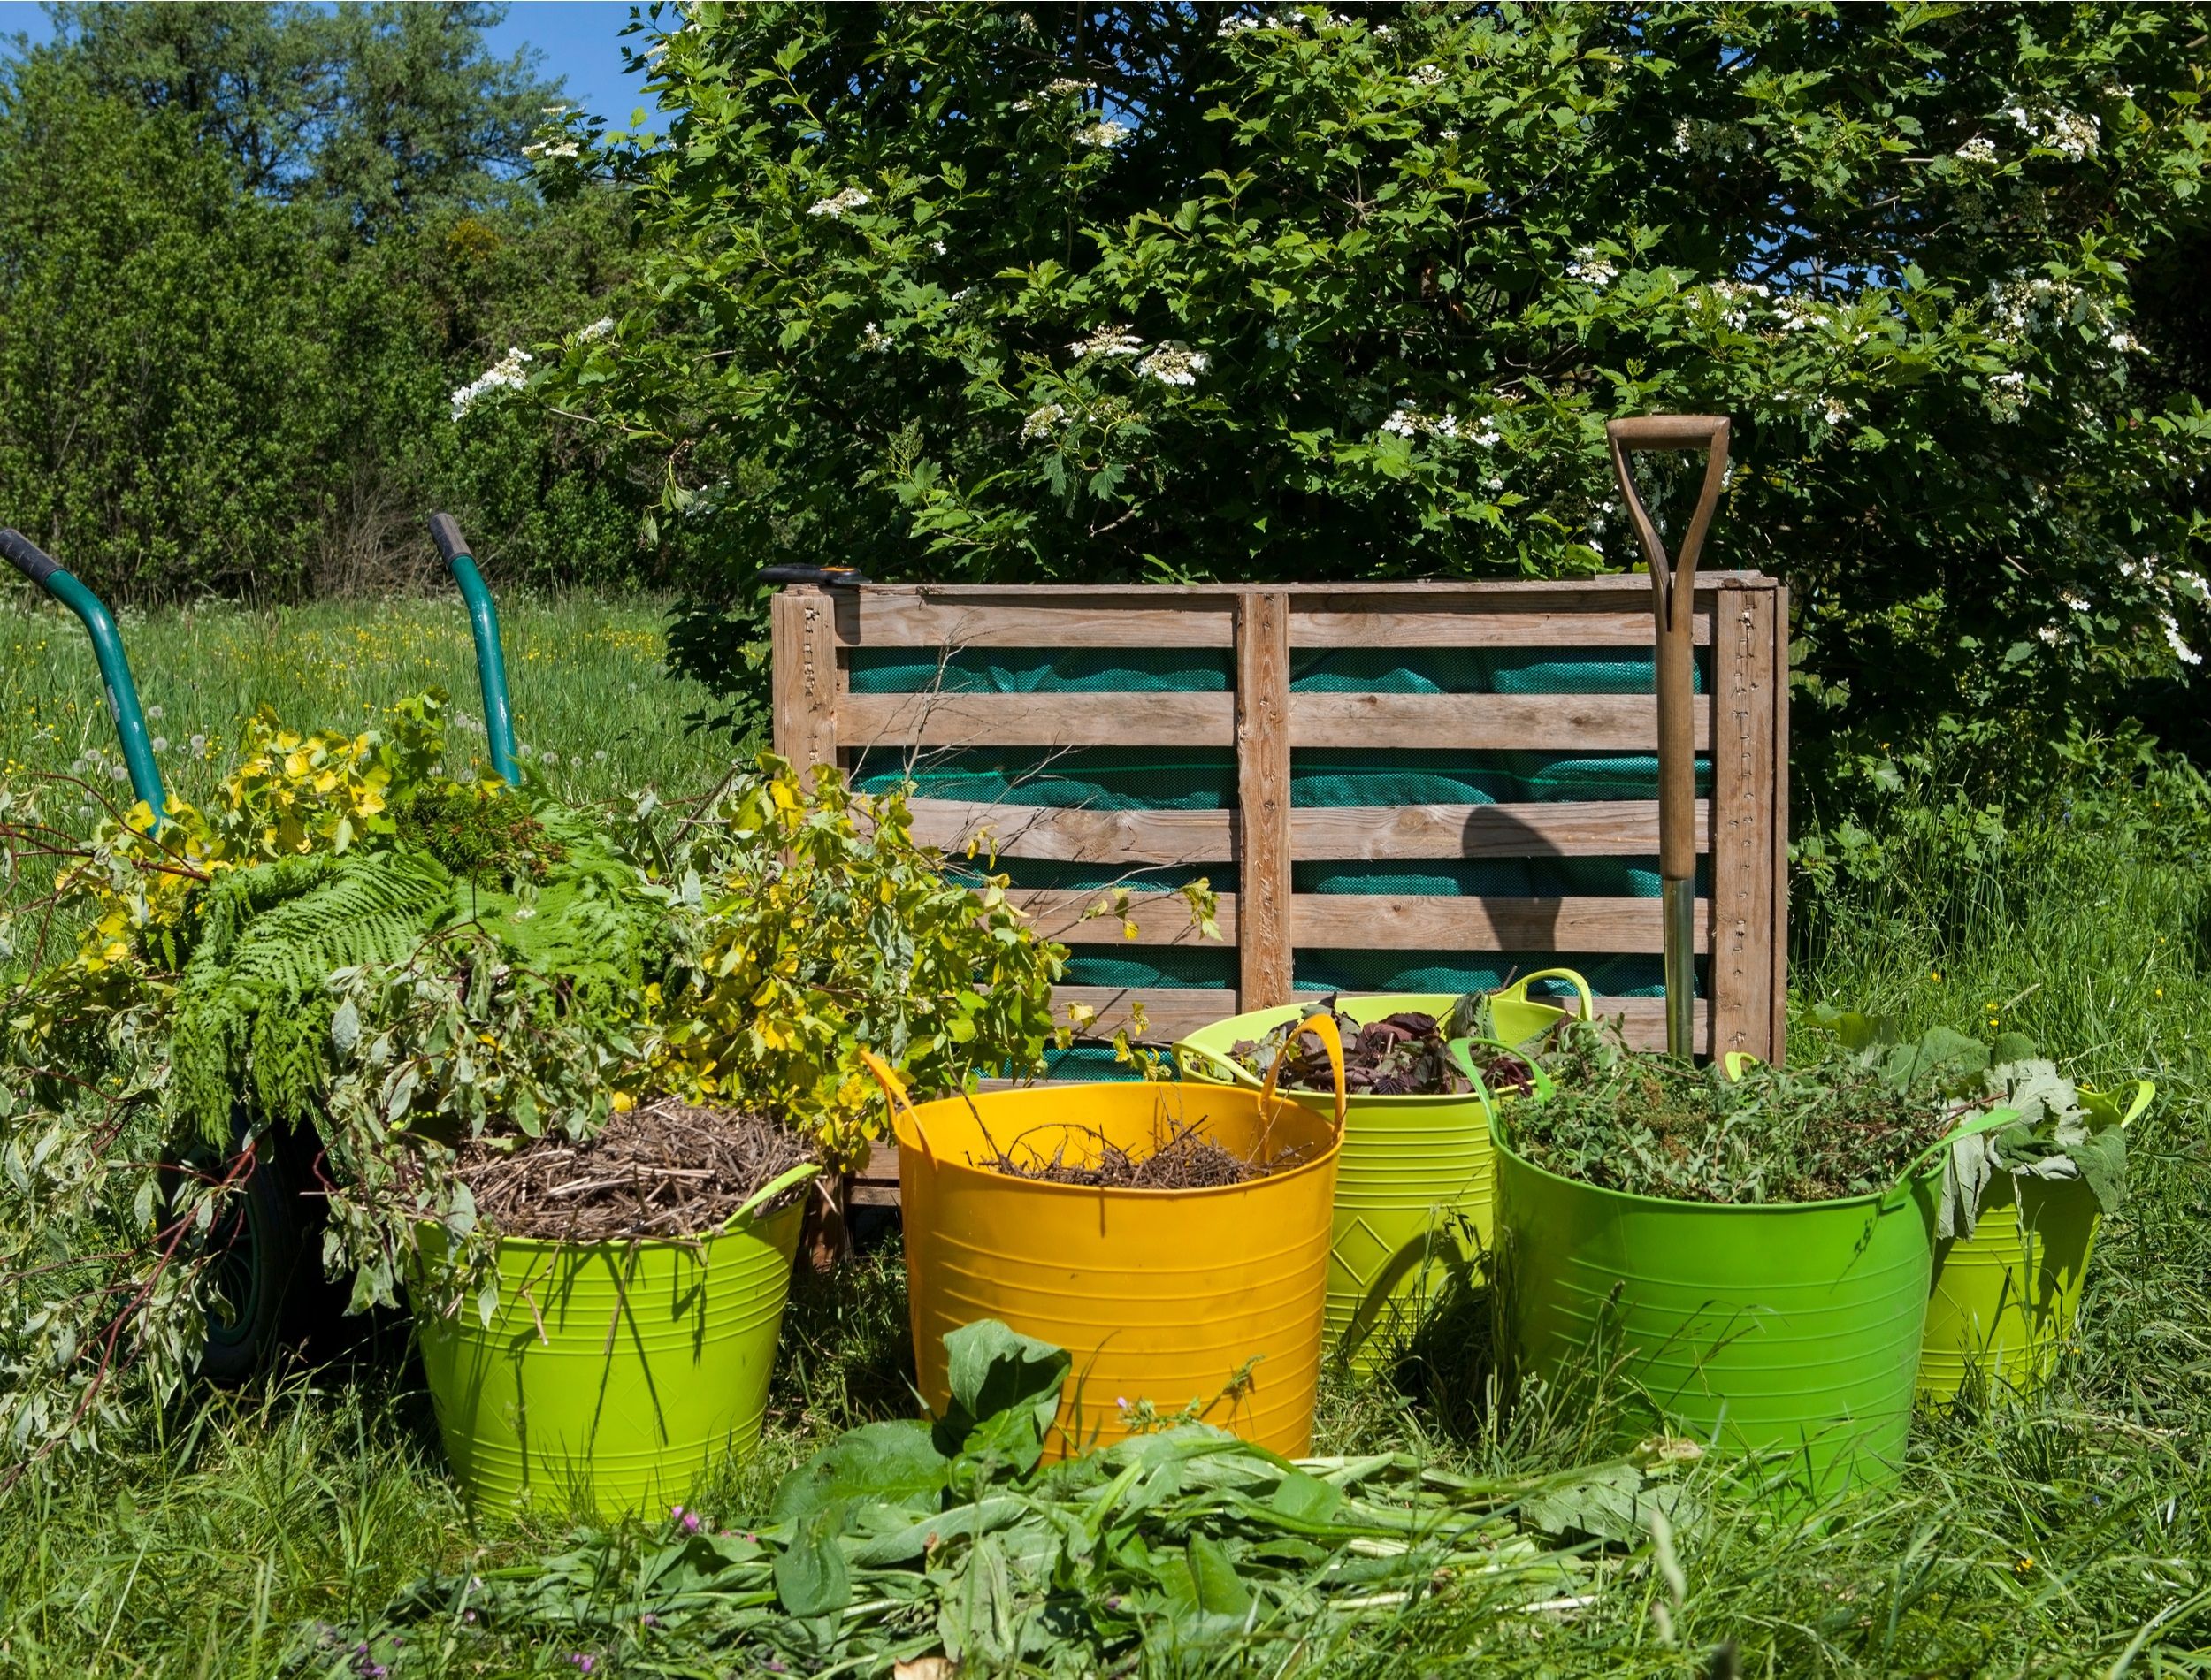 Compost bin and mulch in a summer garden